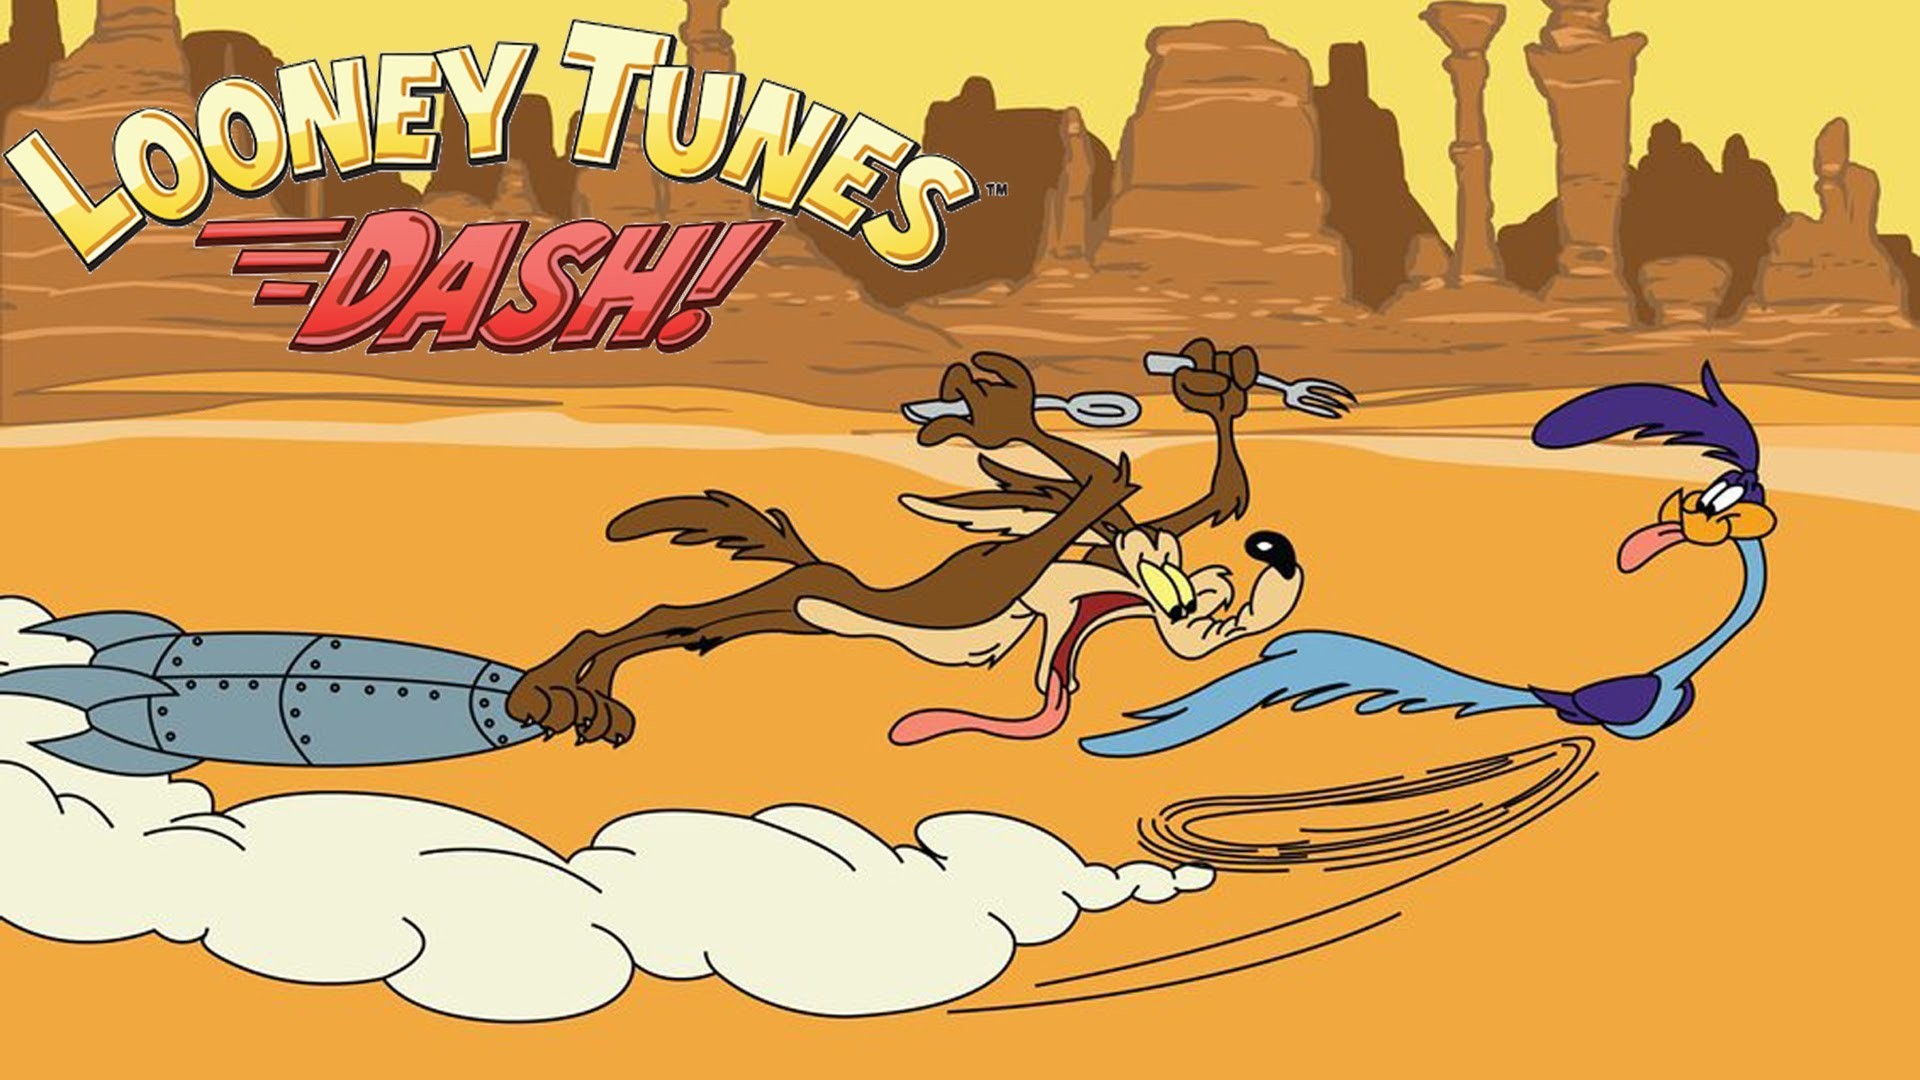 Looney Tunes Dash GamePlay Video Part 5 | Running "Road Runner"